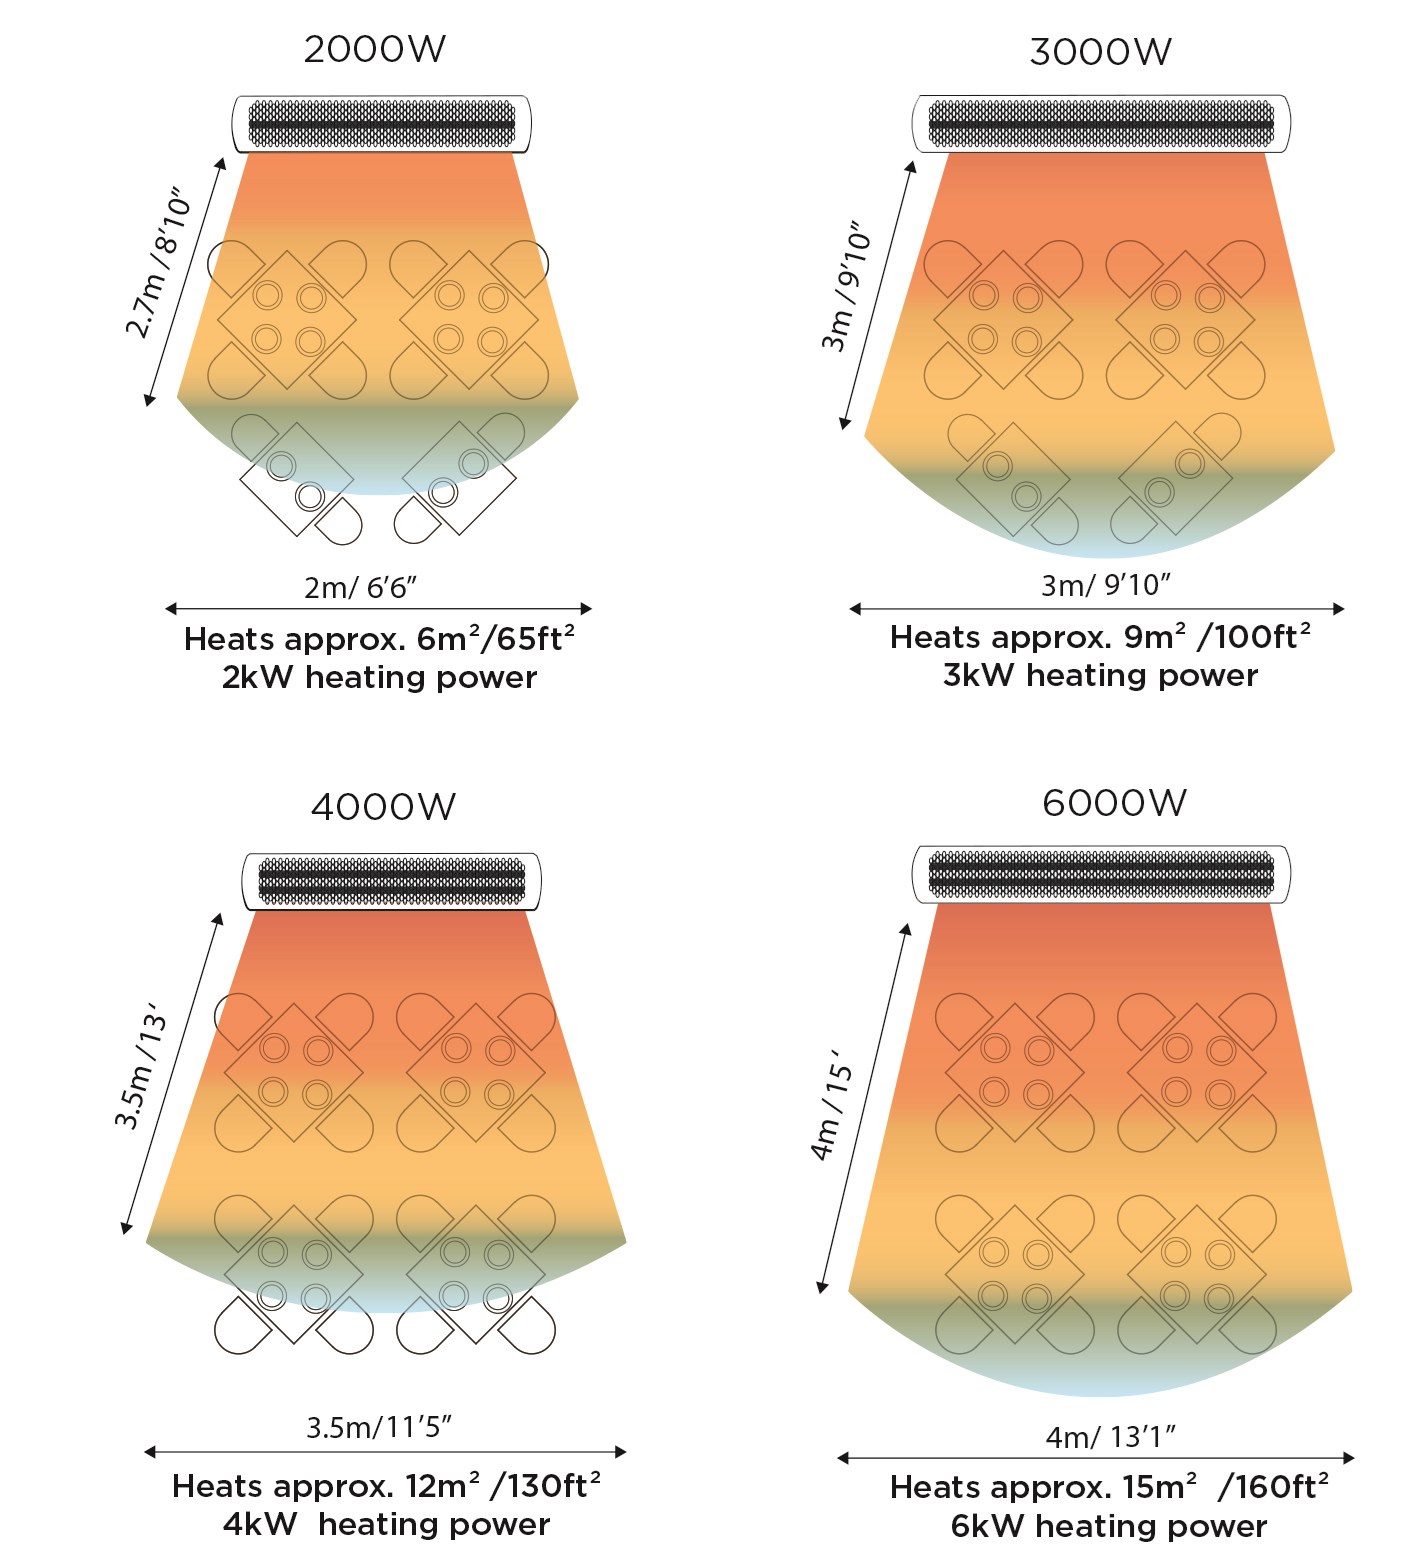 Heating surface diagrams